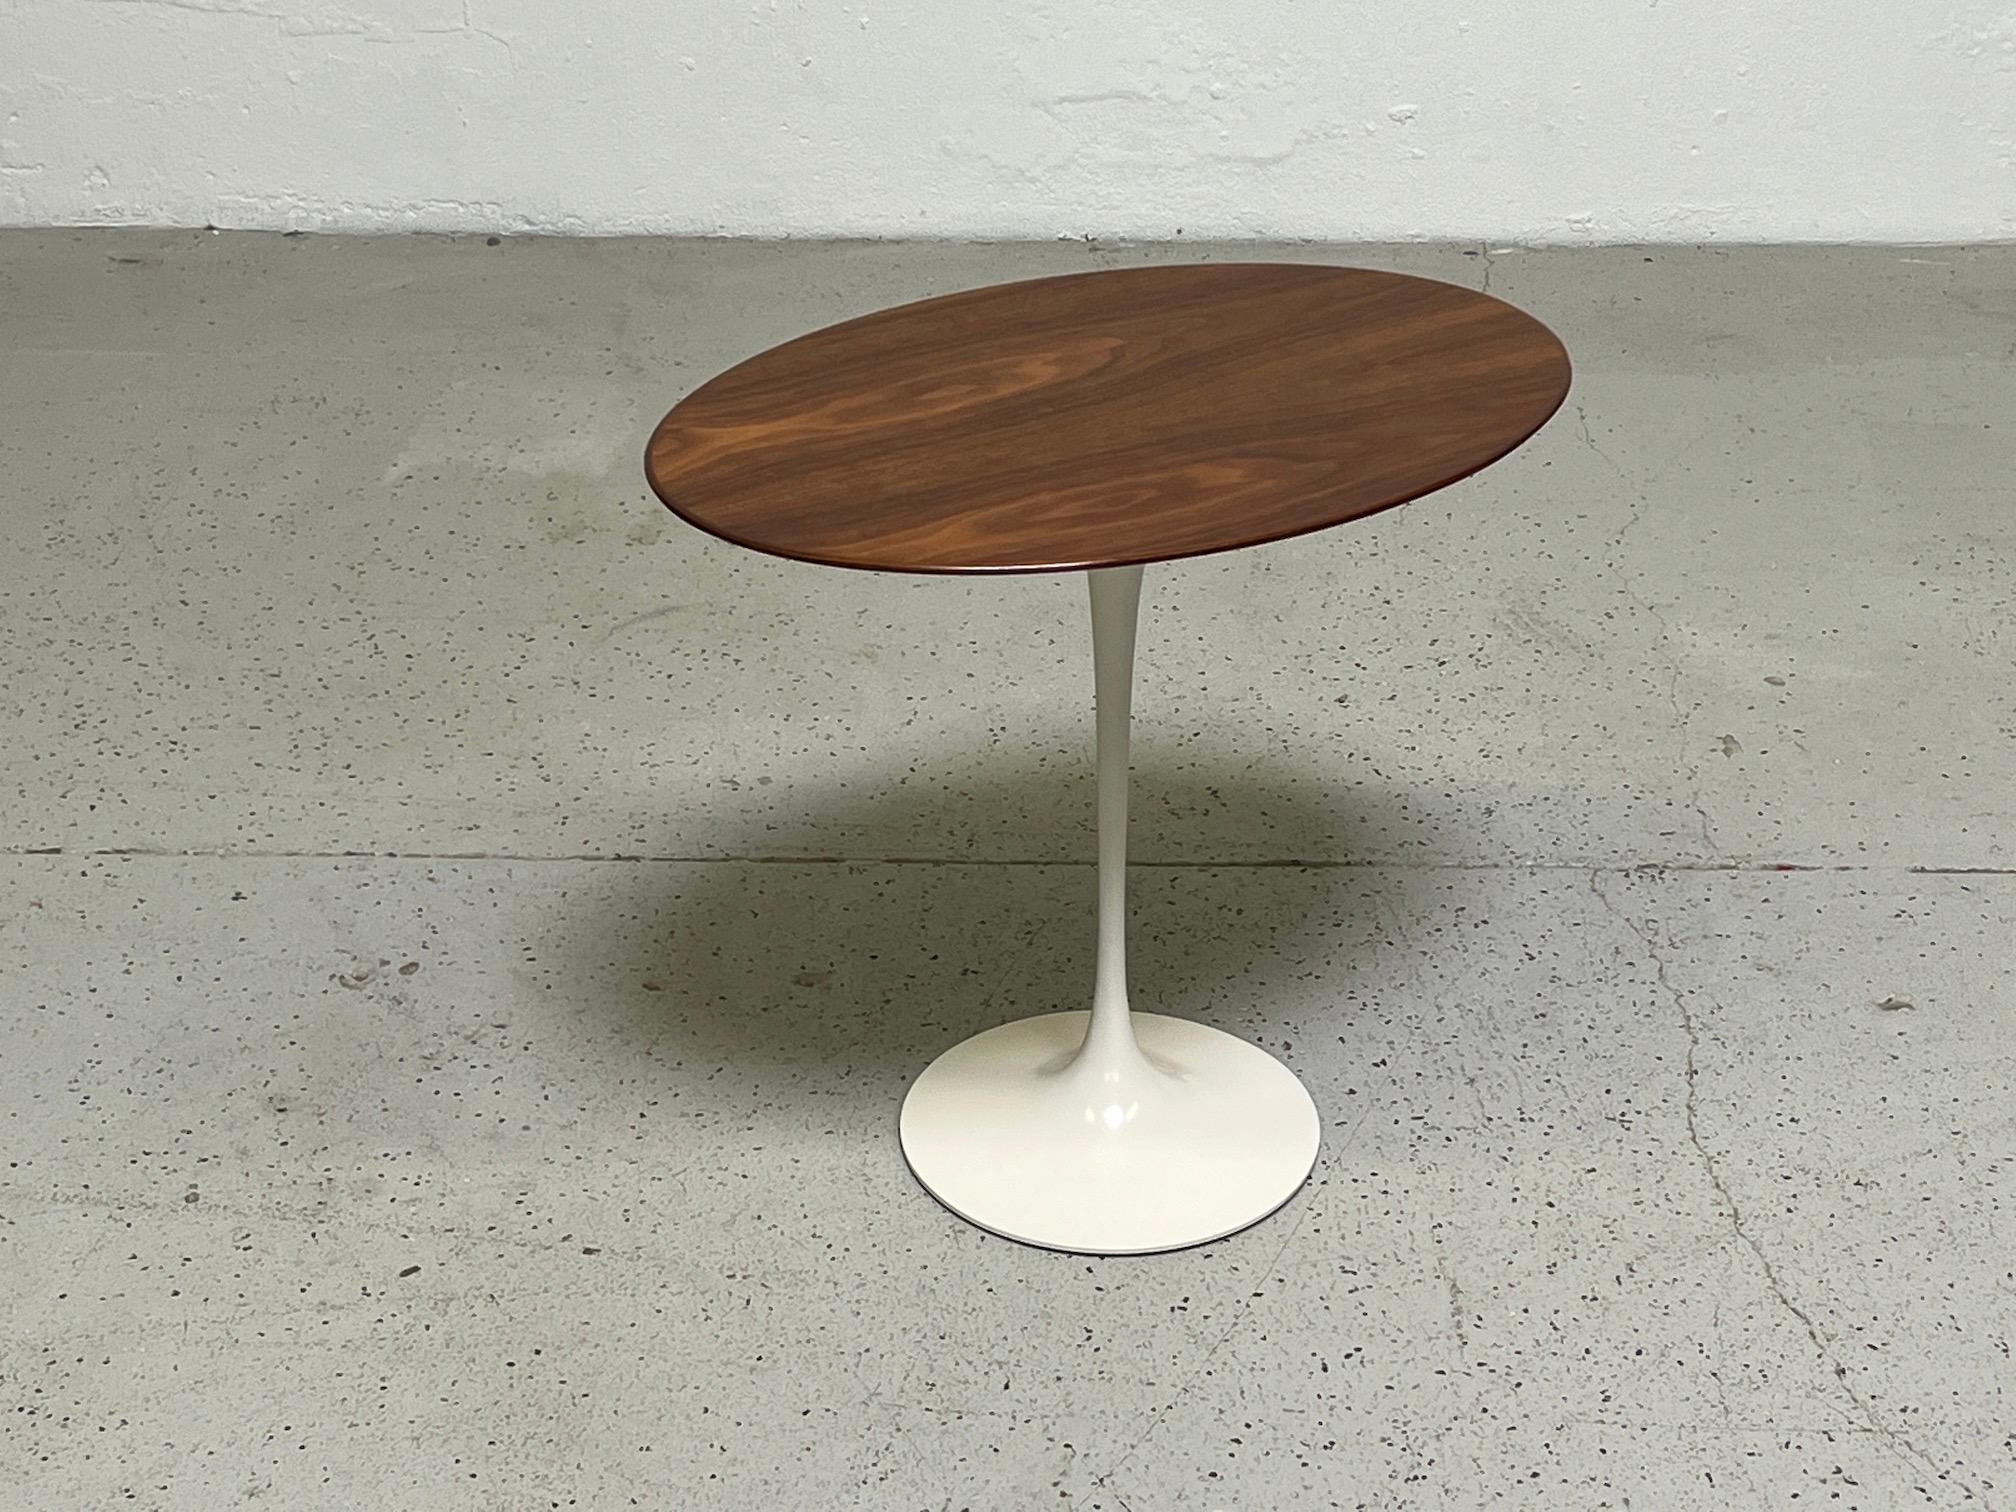 An early walnut top elliptical tulip side table designed by Eero Saarinen for Knoll.